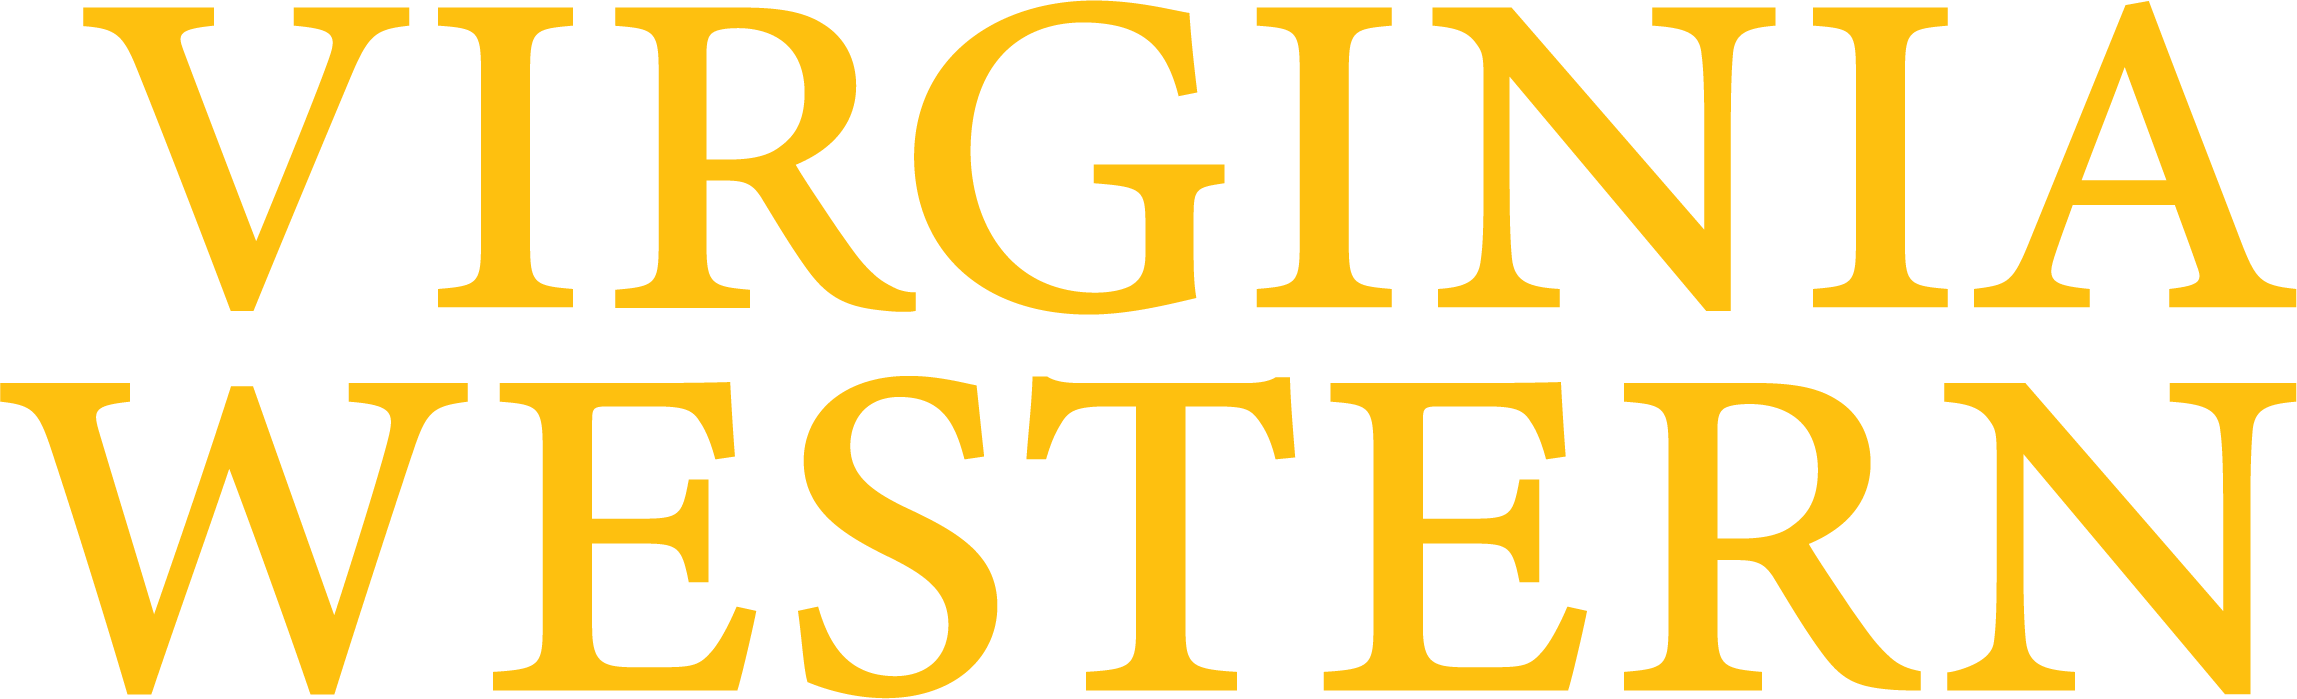 Virginia Western Logo Yellow